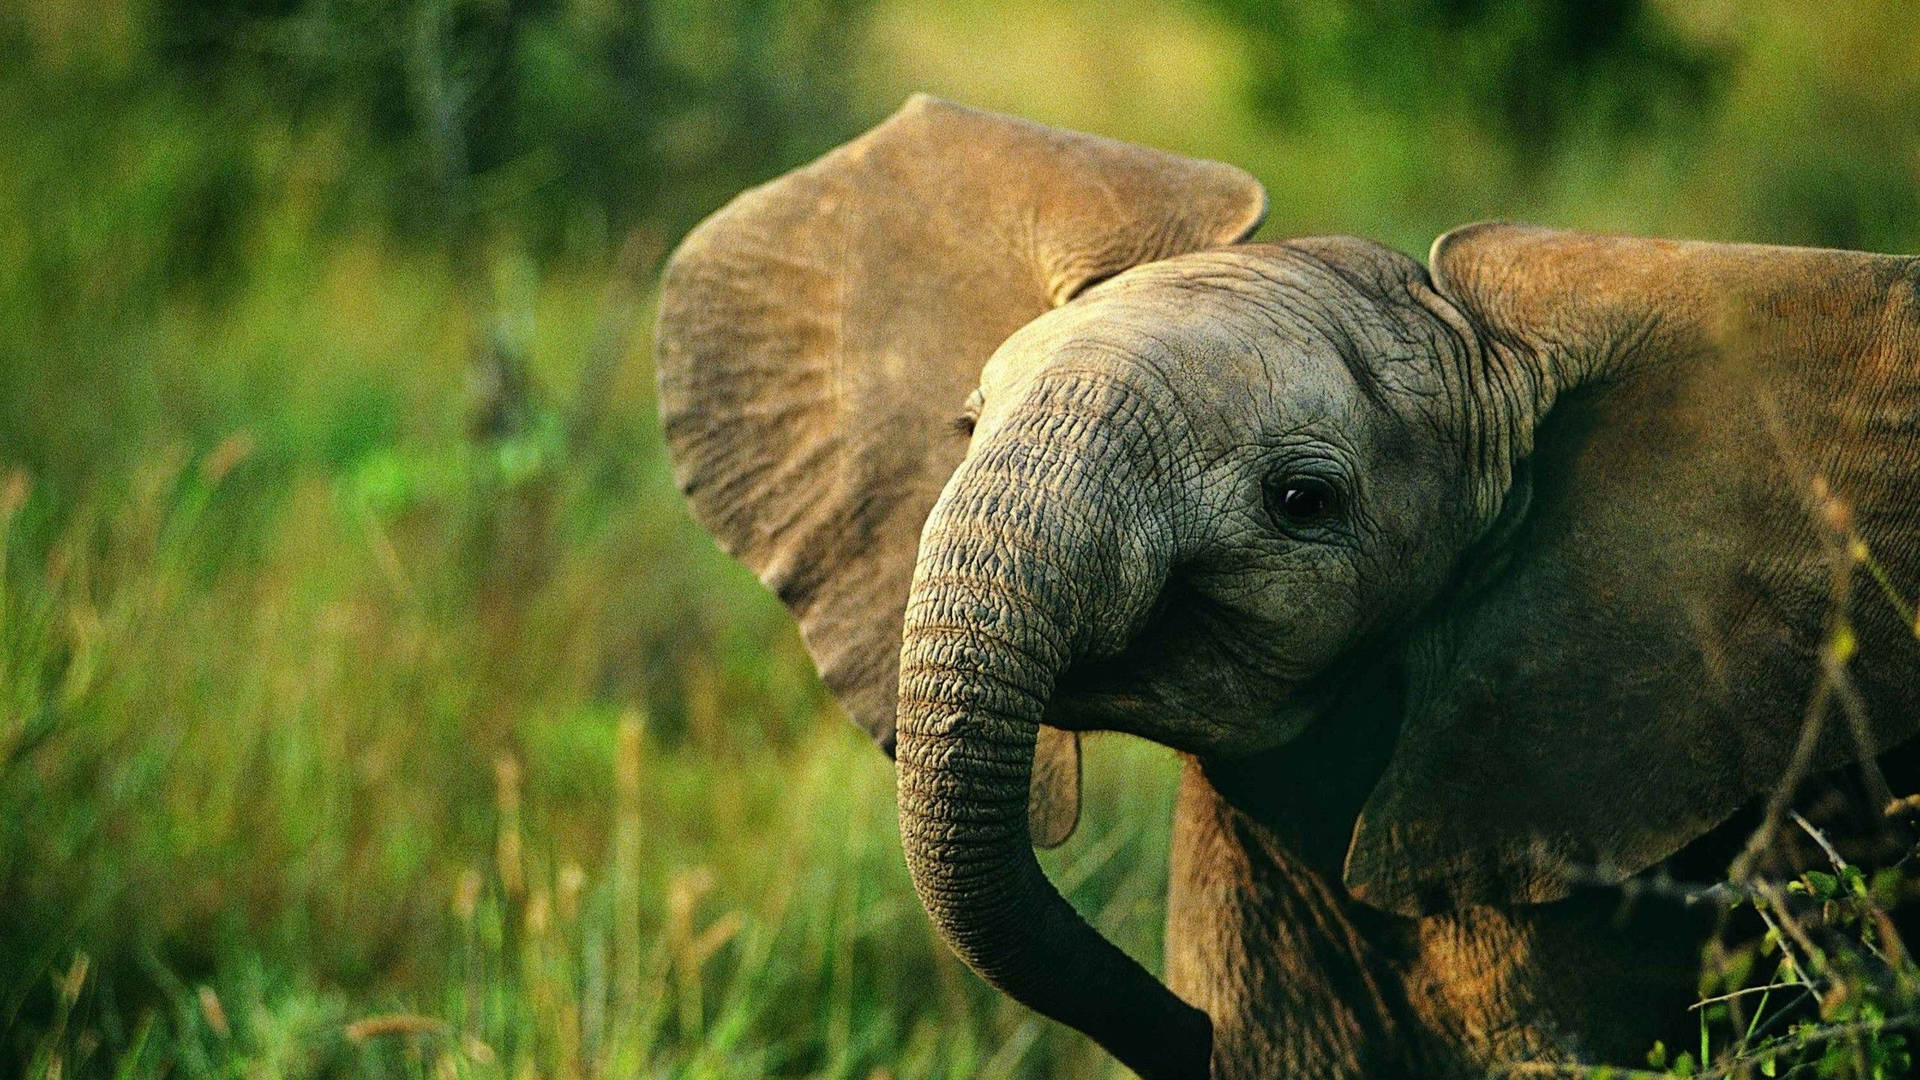 Cute animal baby elephant wallpaper